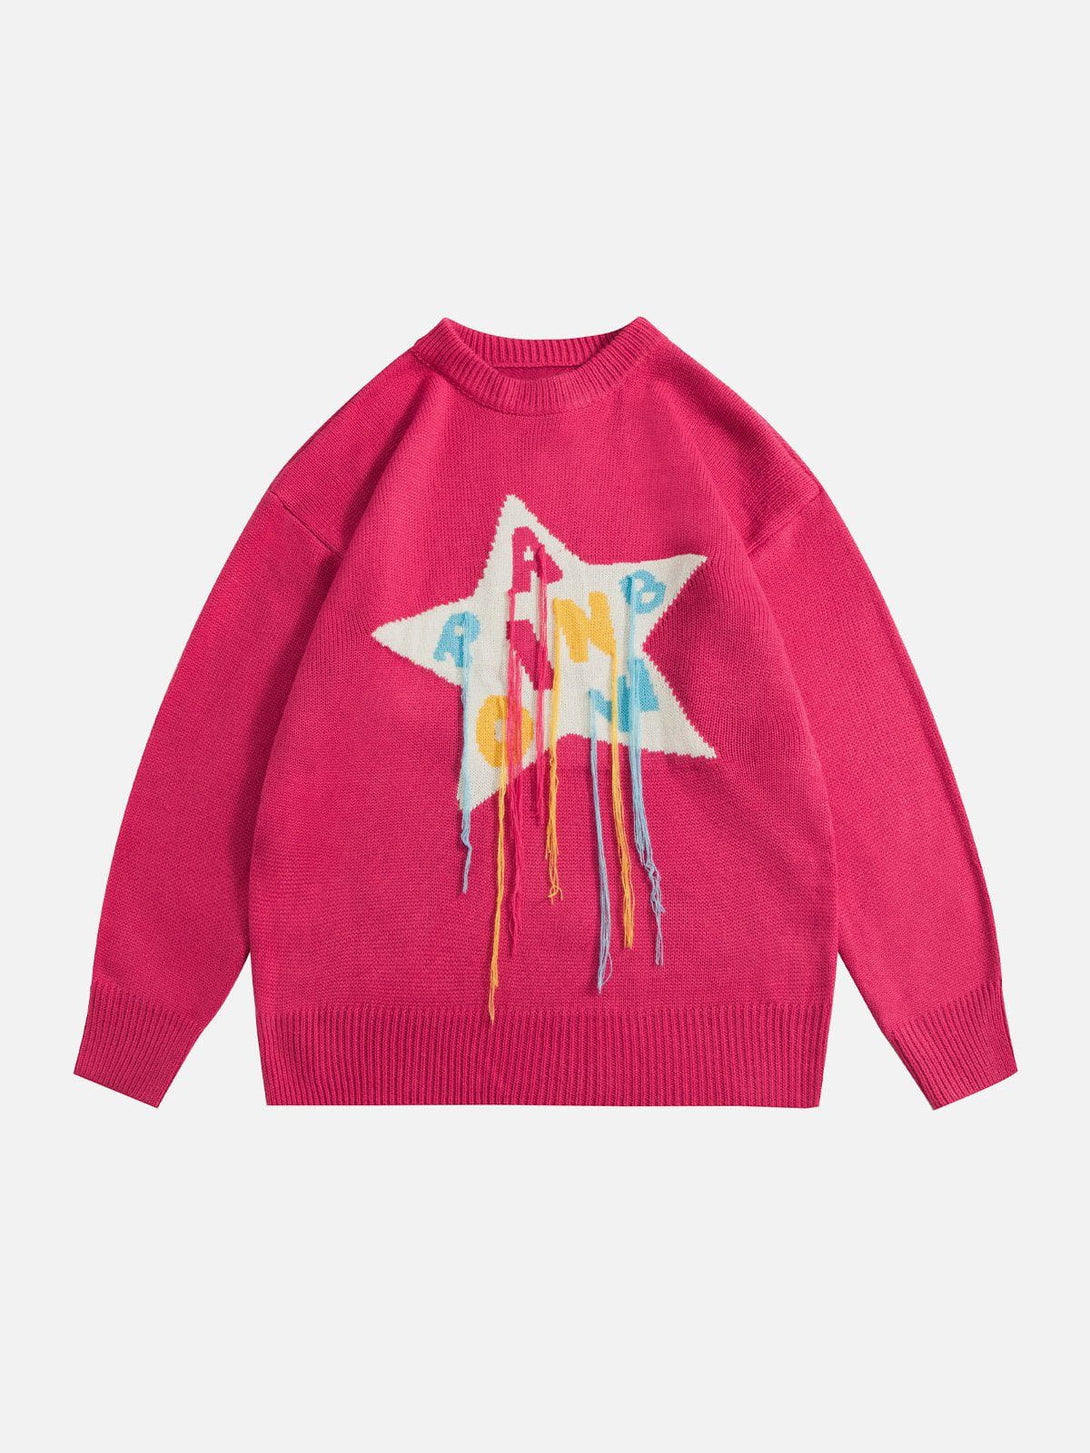 Levefly - Star Tassel Sweater - Streetwear Fashion - levefly.com